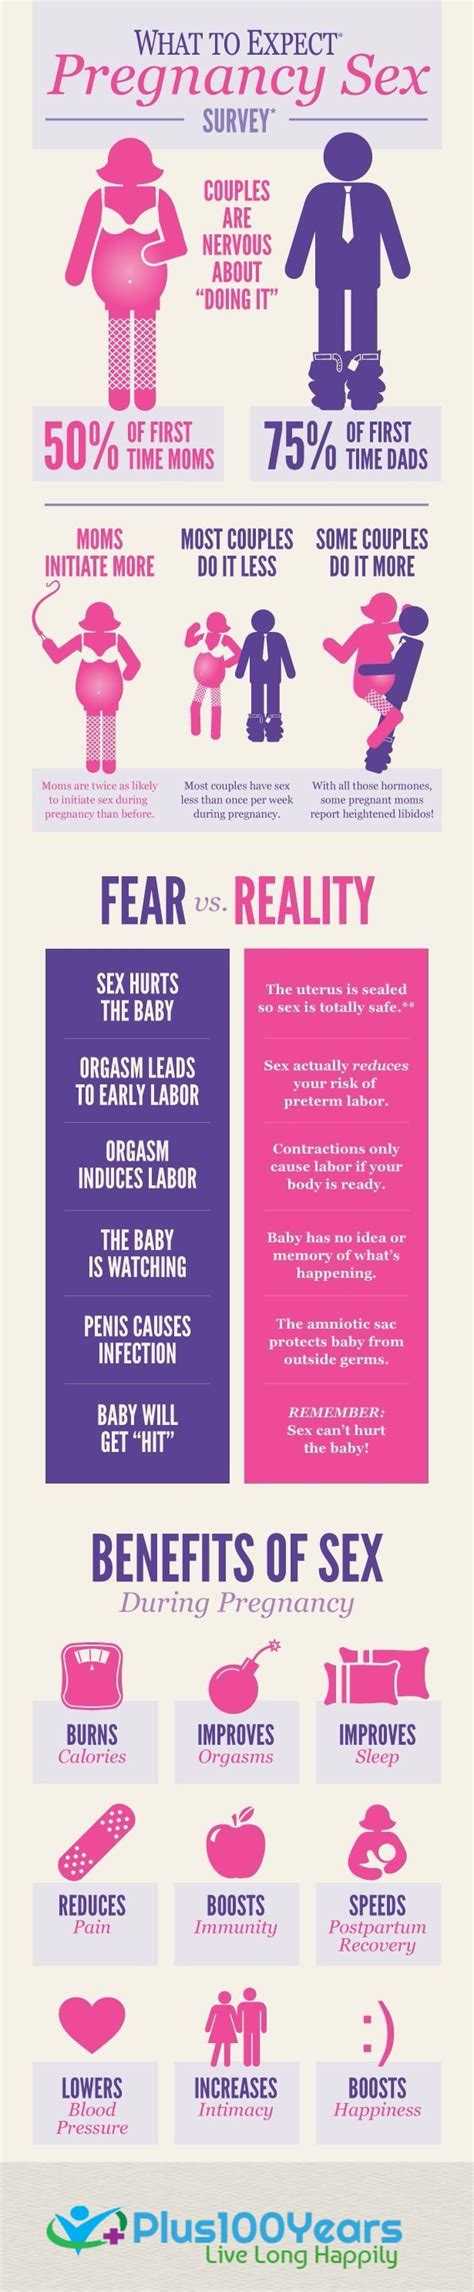 73 best pregnancy guide images on pinterest pregnancy pregnancy health and pregnancy guide